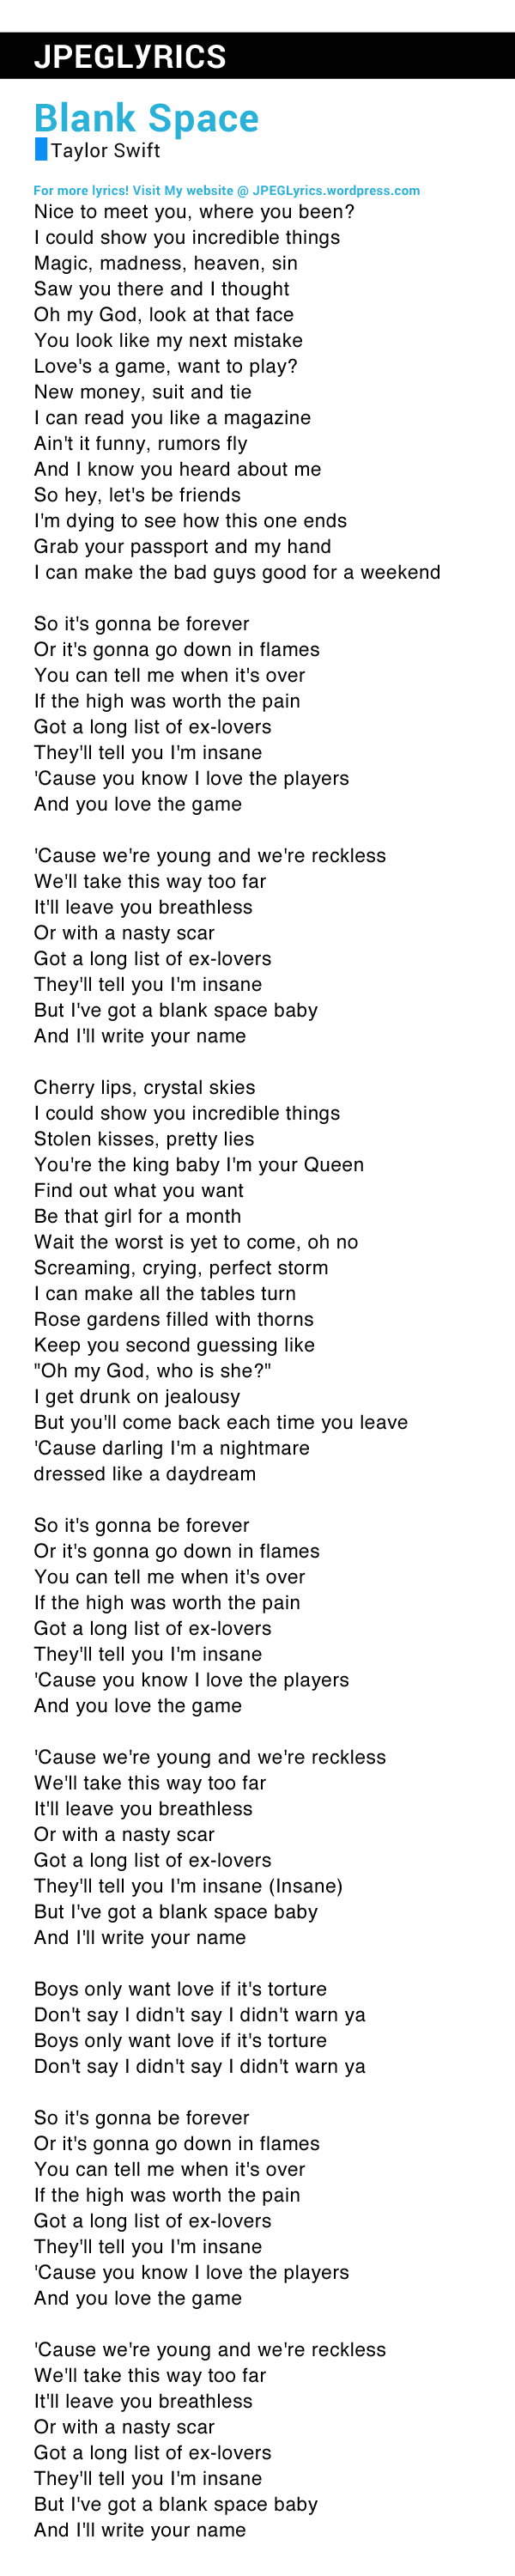 Taylor Swift – Blank Space Lyrics